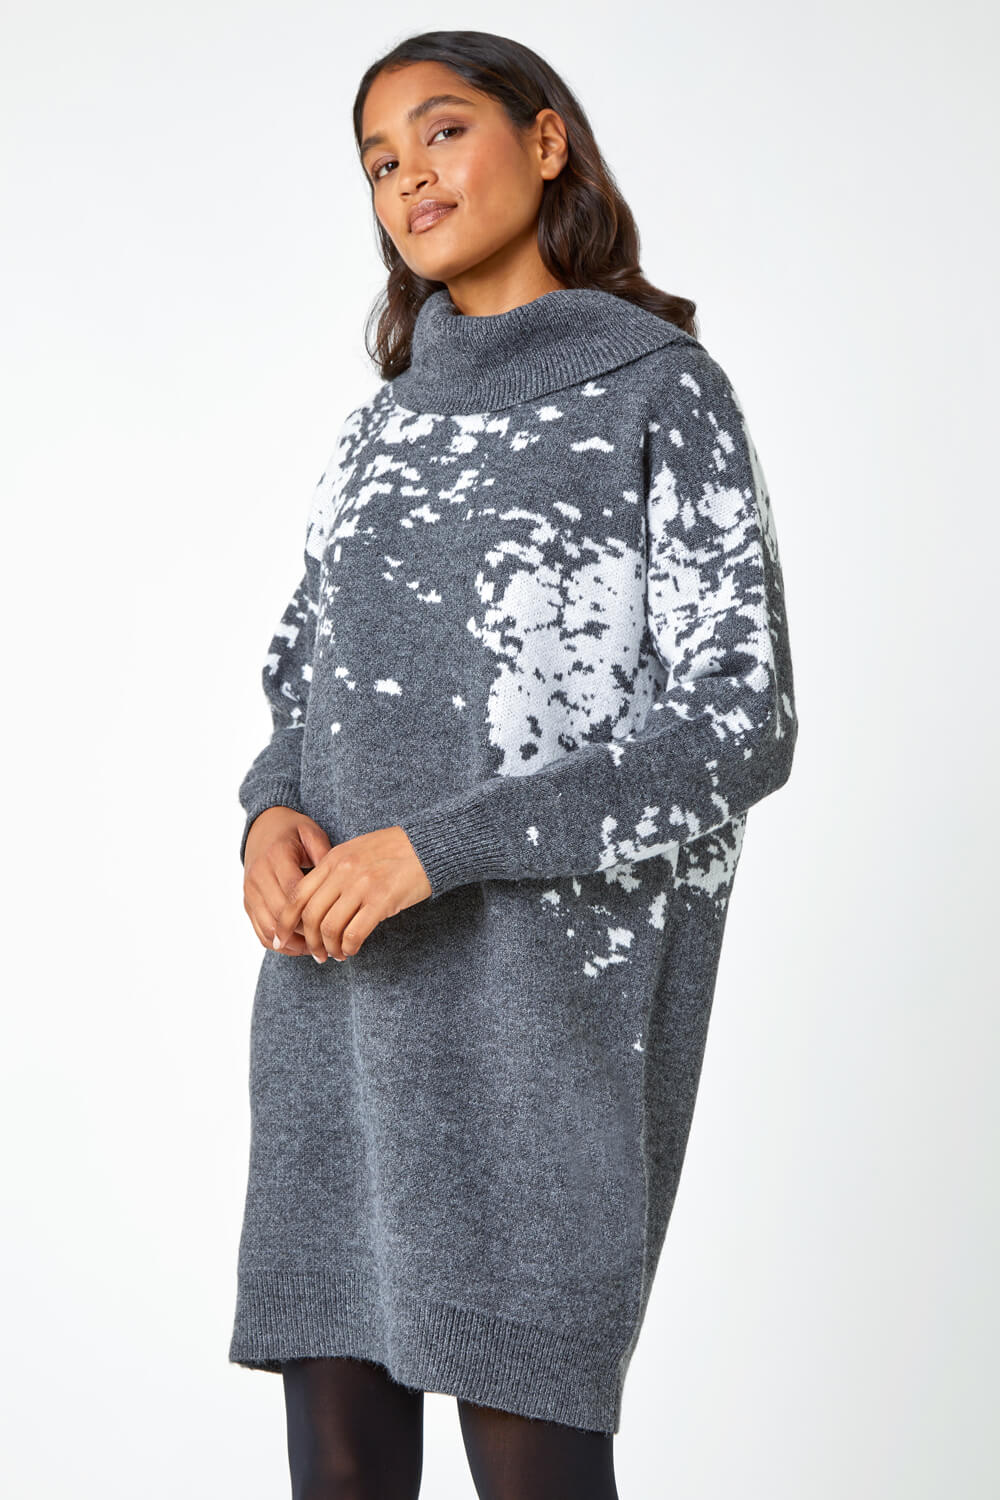 Dark Grey Abstract Print Cowl Neck Jumper Dress, Image 3 of 5